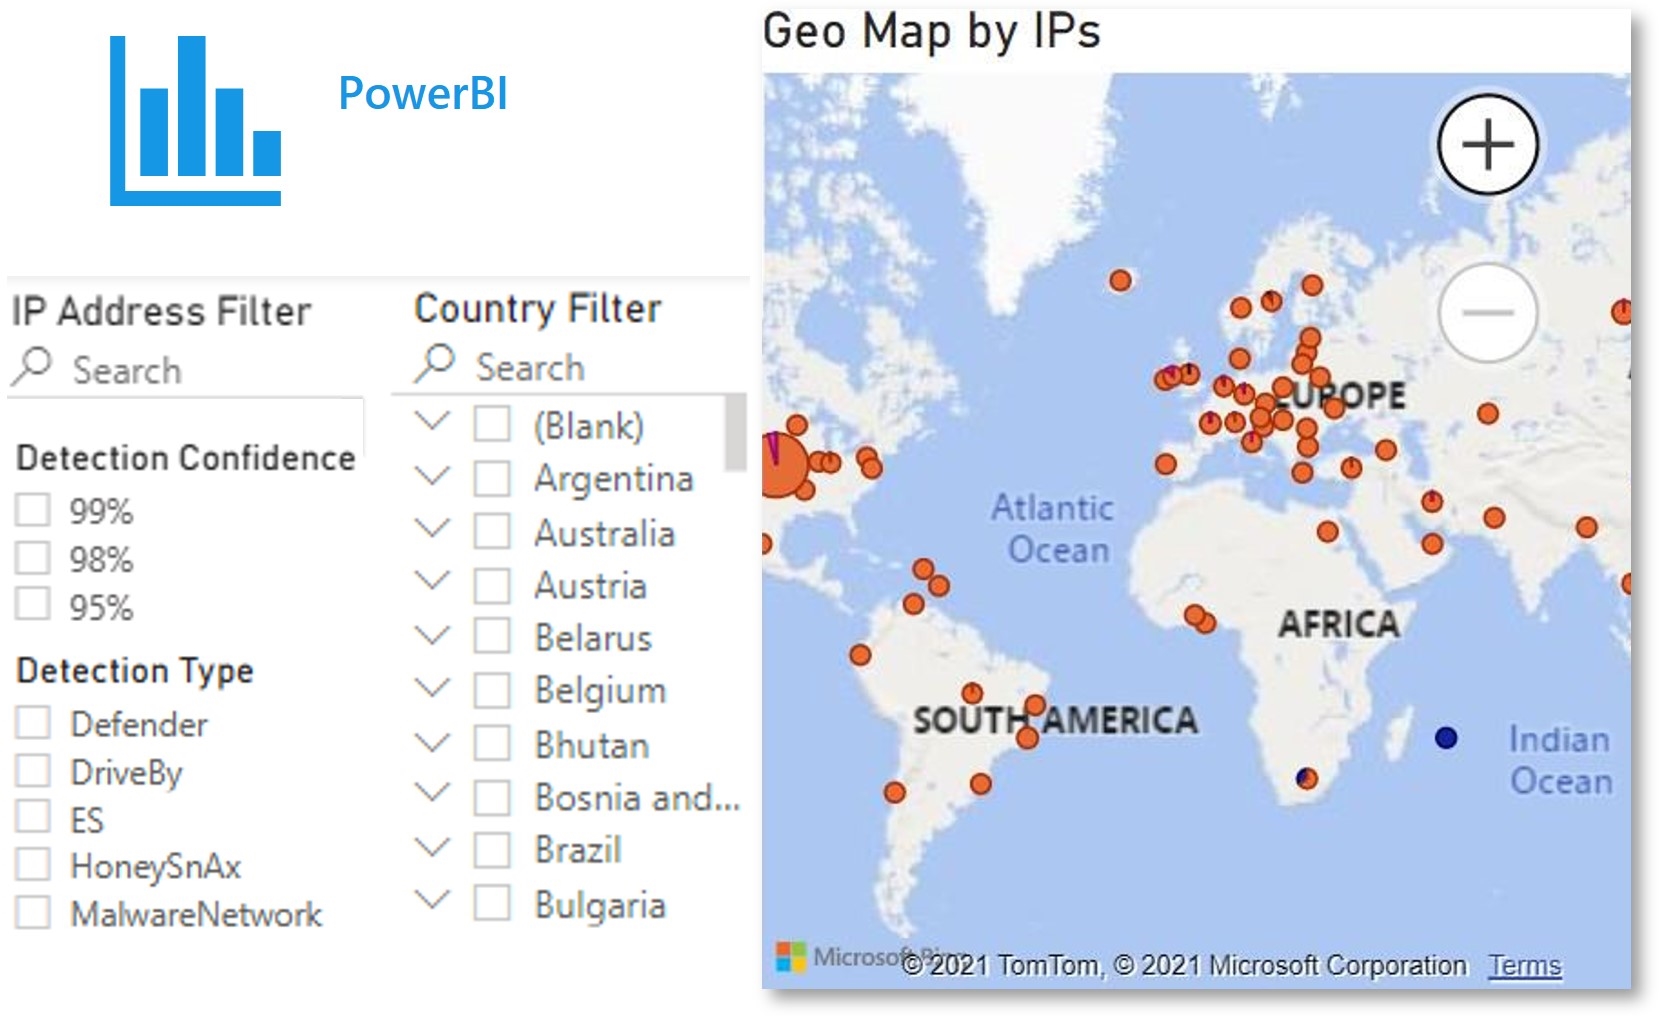 Geo map of IPs